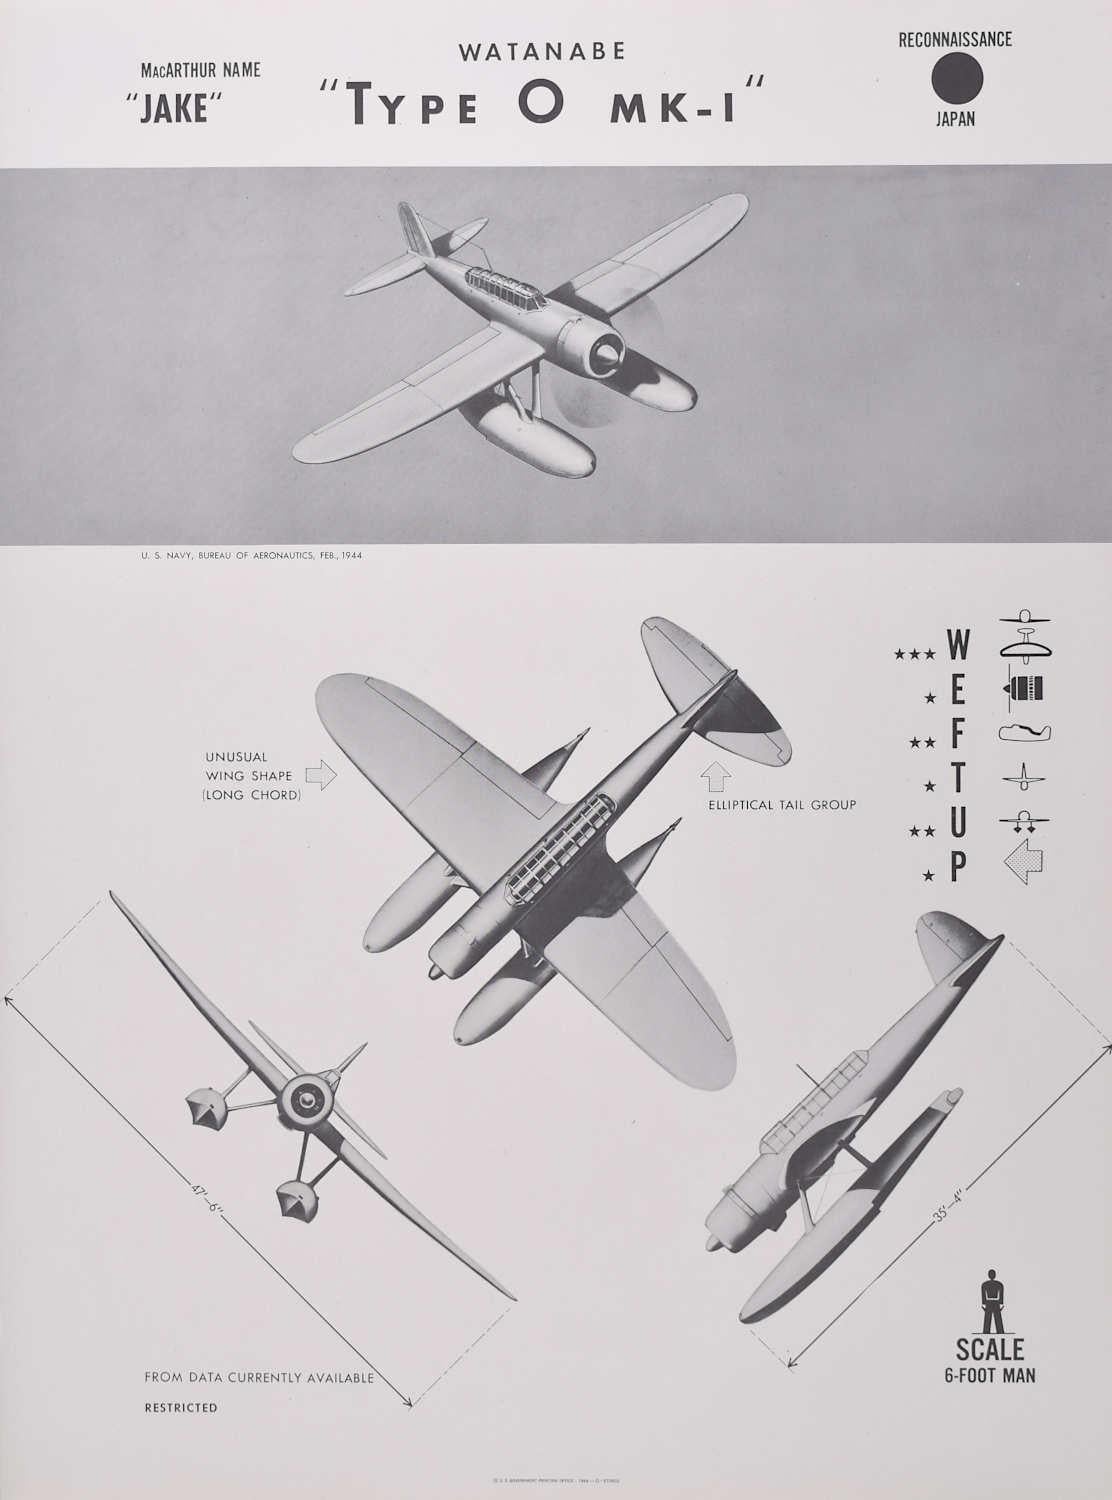 1944 Watanabe "Type O MK-1" reconnaissance plane identification poster WW2 Japan - Print by Unknown